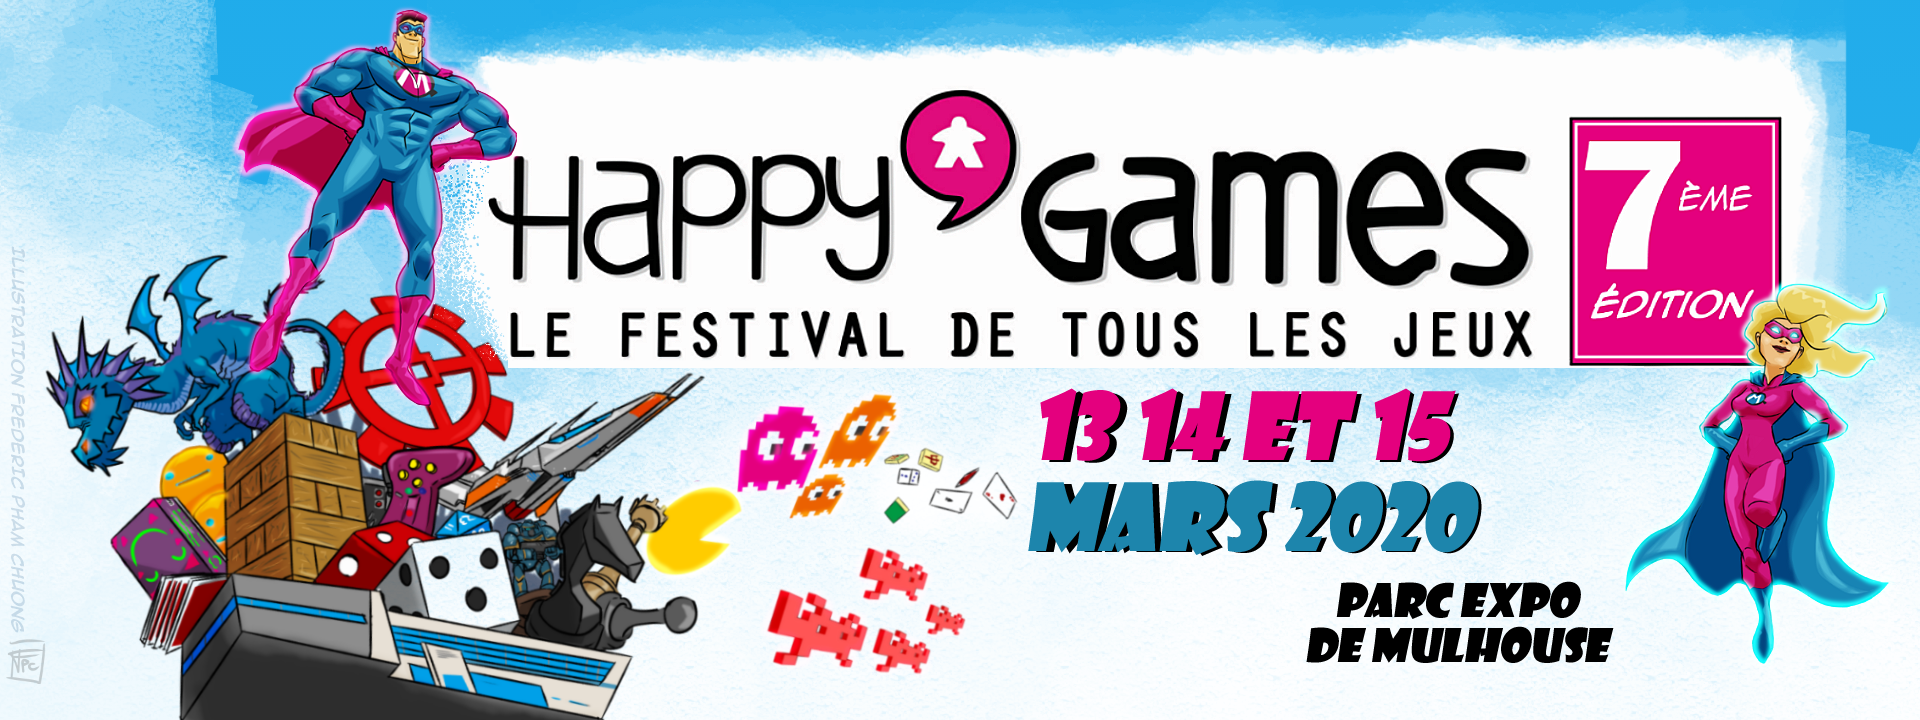 Festival Happy'Games 2020